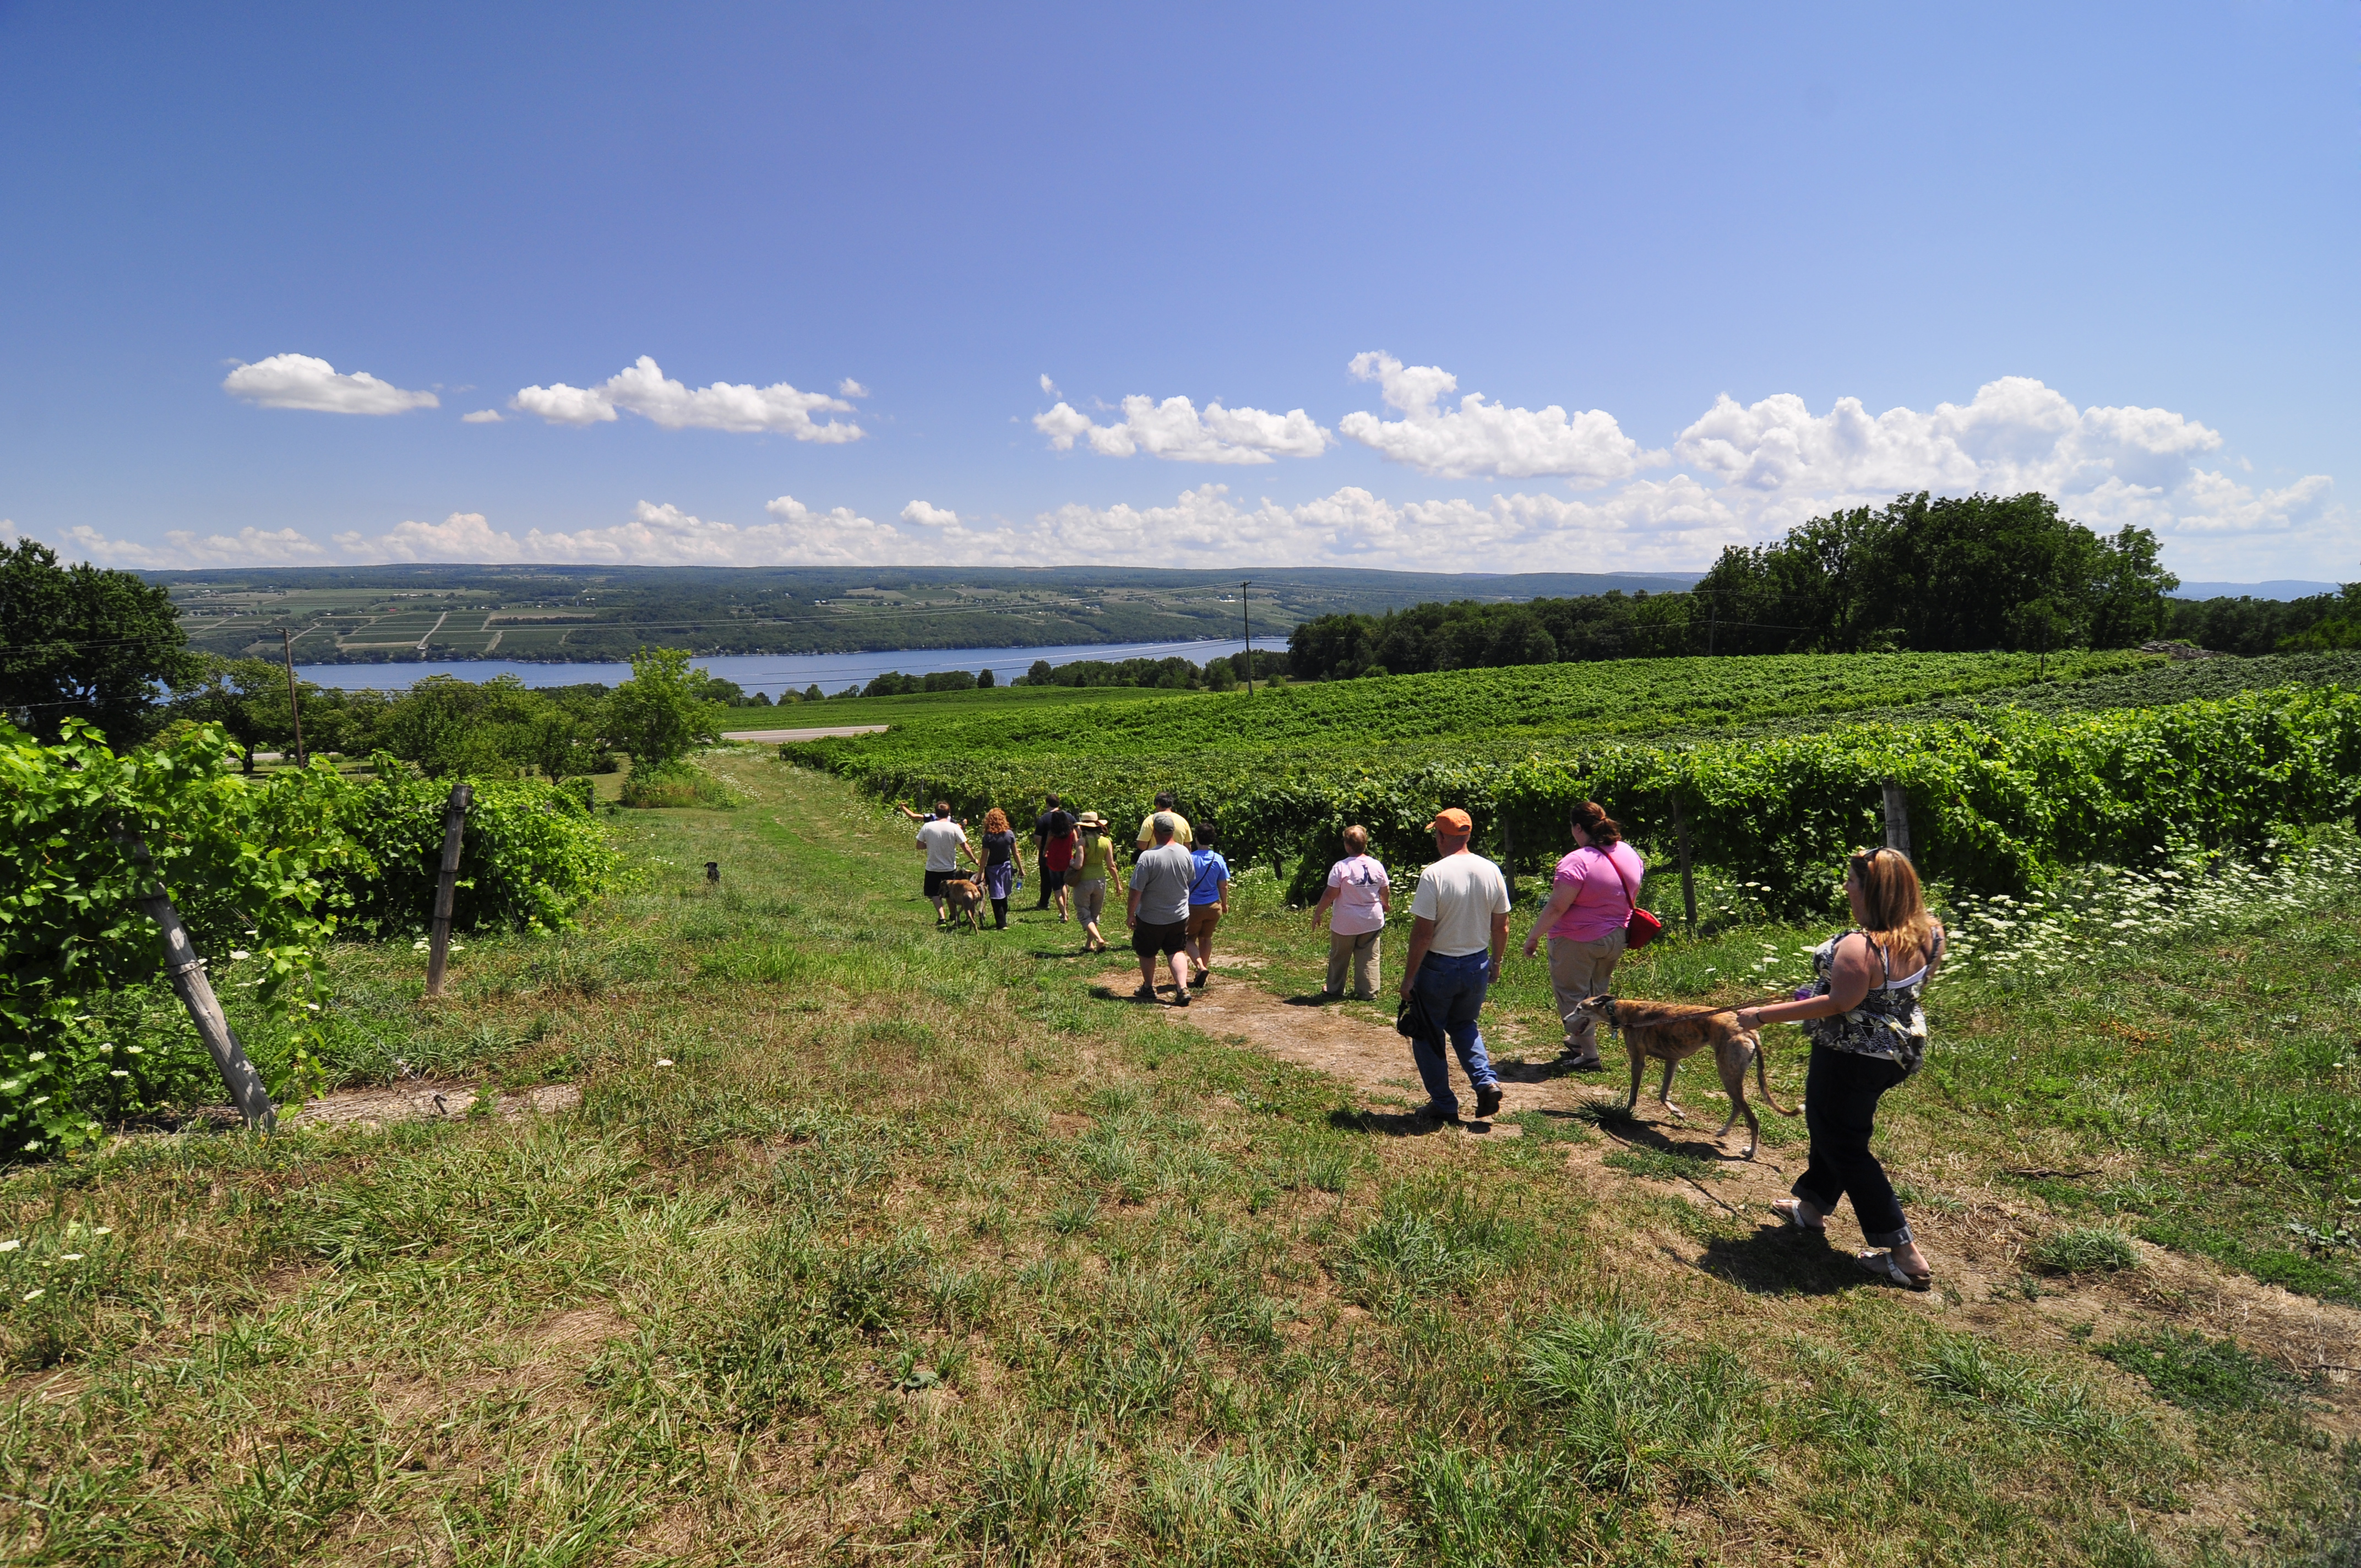 Gale Gala Apples - Fulkerson Winery - Finger Lakes Winery - Seneca Lake  Wine Trail